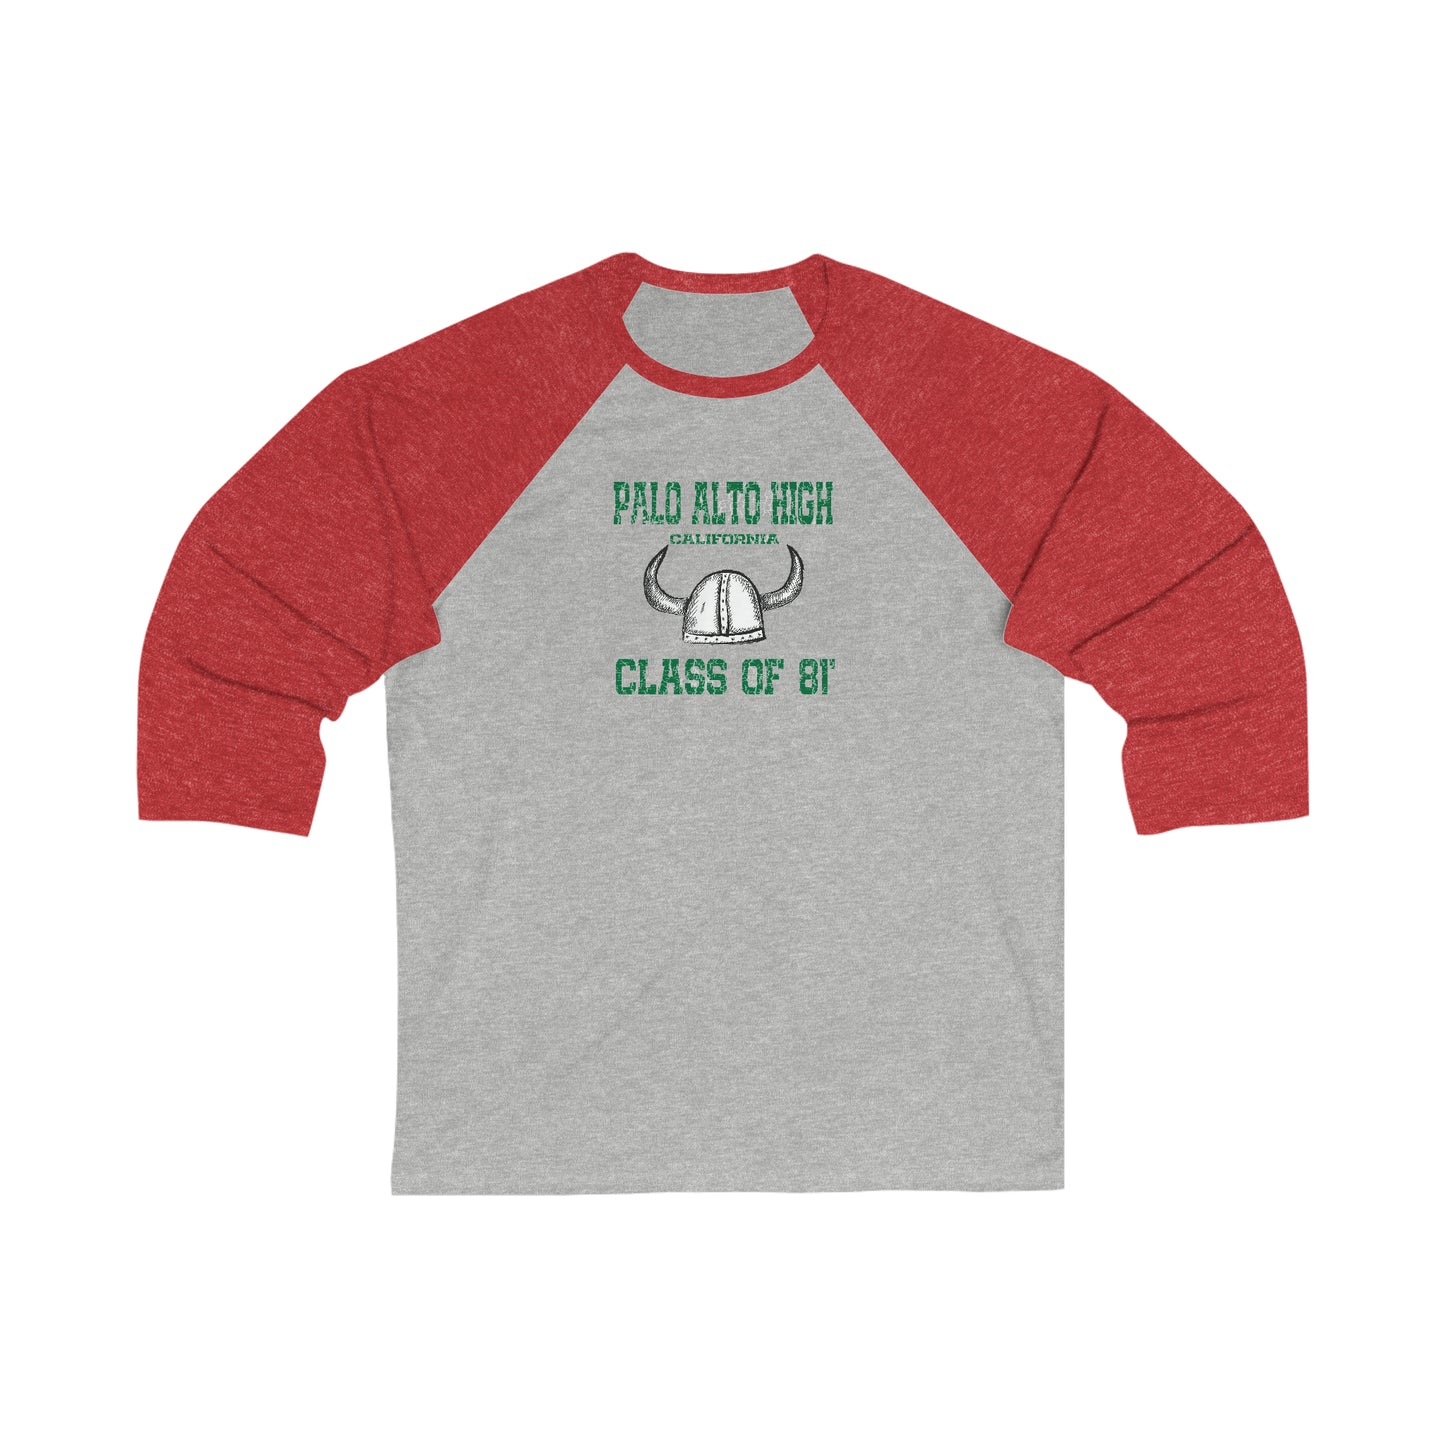 Paly 81 - Palo Alto High School Alumni Baseball T-Shirt - Class of 1981 - NLCC 001